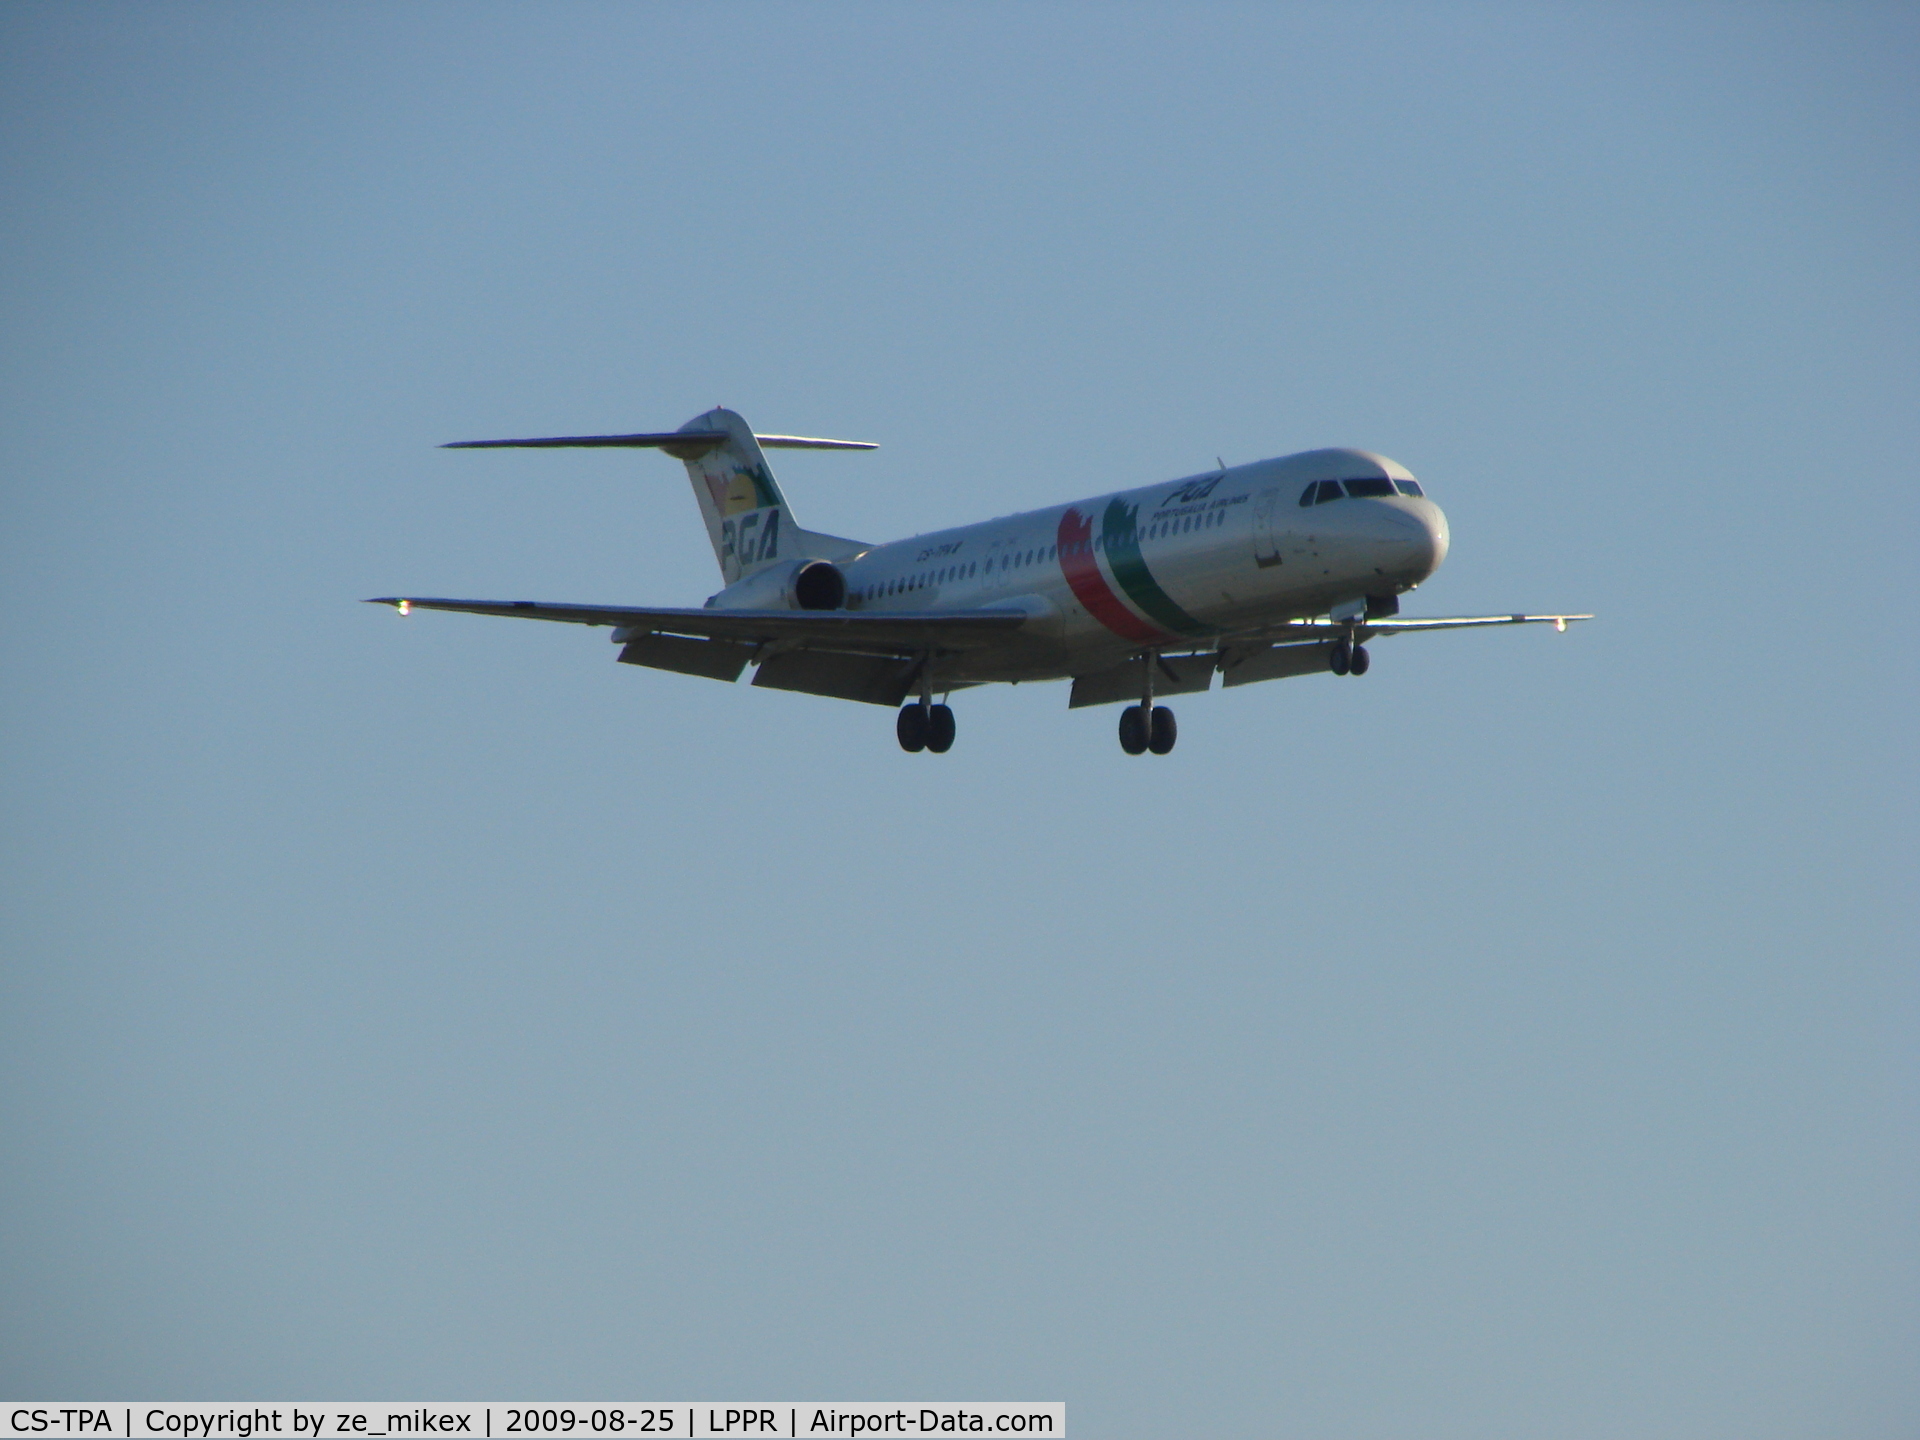 CS-TPA, 1989 Fokker 100 (F-28-0100) C/N 11257, Portugalia landing